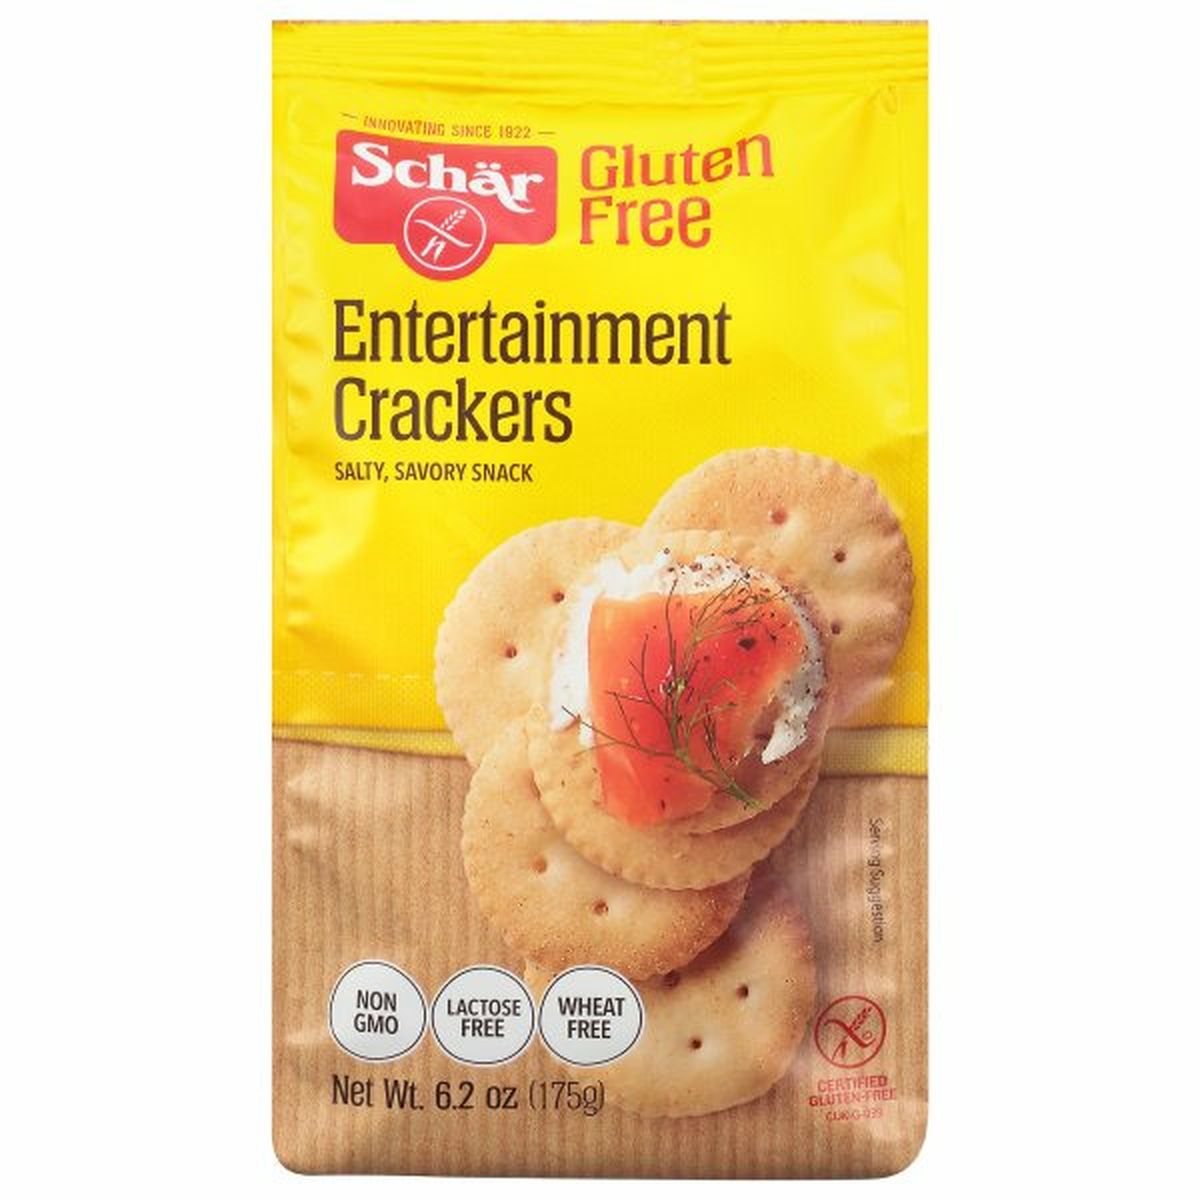 Calories in Schar Crackers, Gluten Free, Entertainment